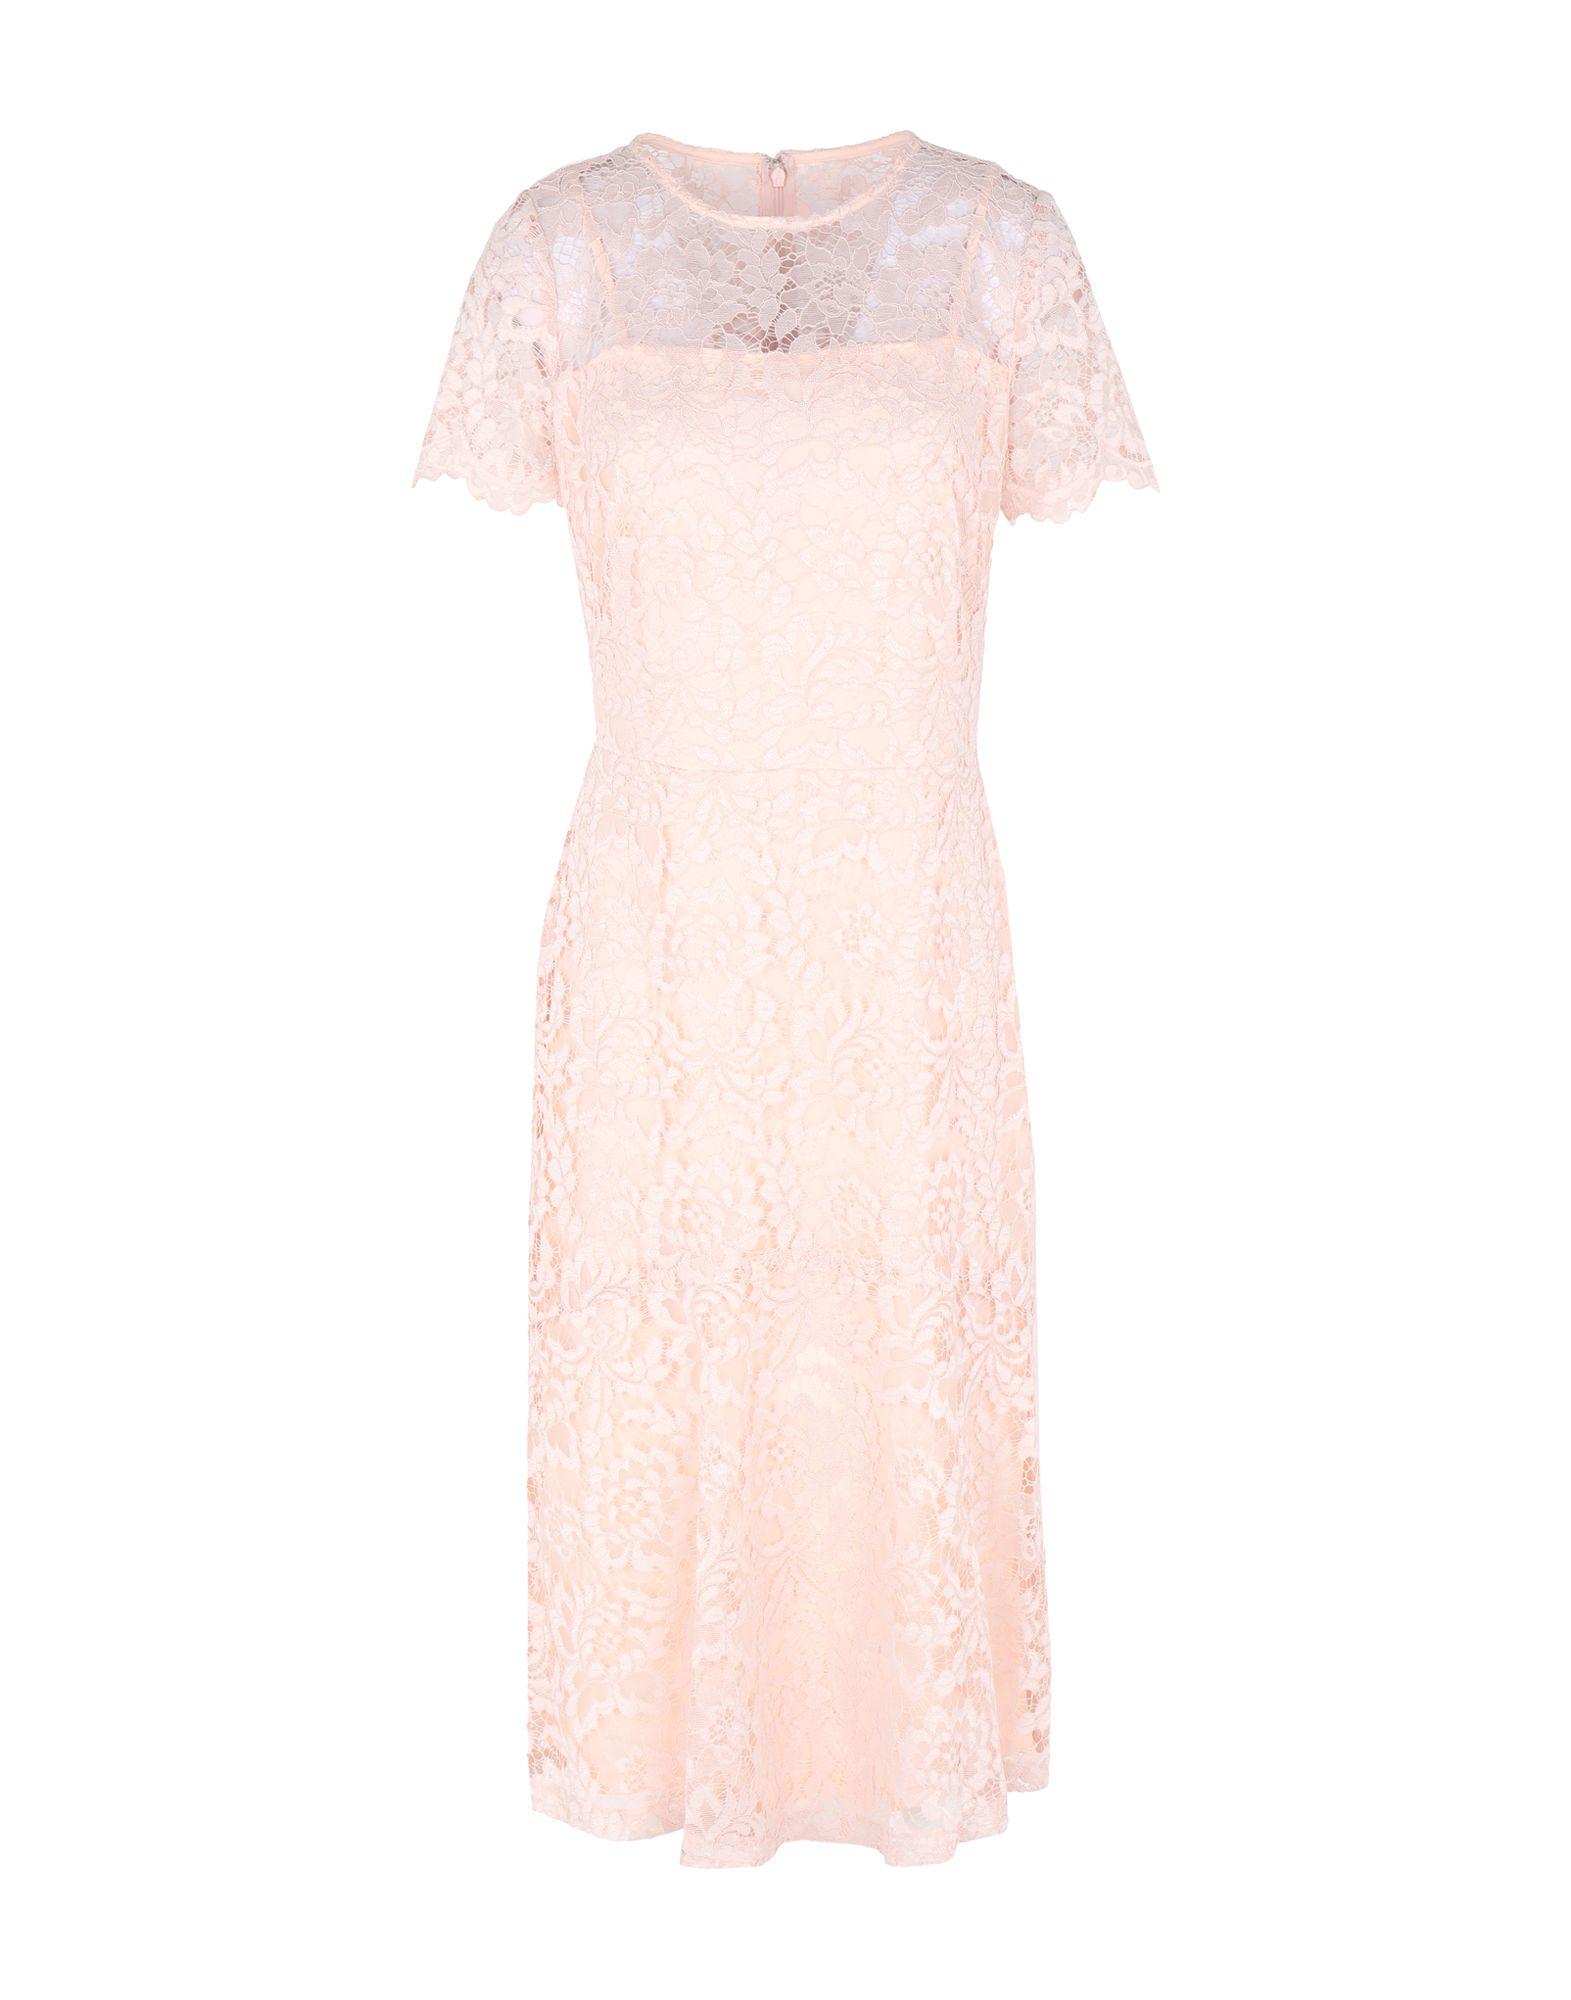 Lauren by Ralph Lauren Lace 3/4 Length Dress in Light Pink (Pink) - Lyst